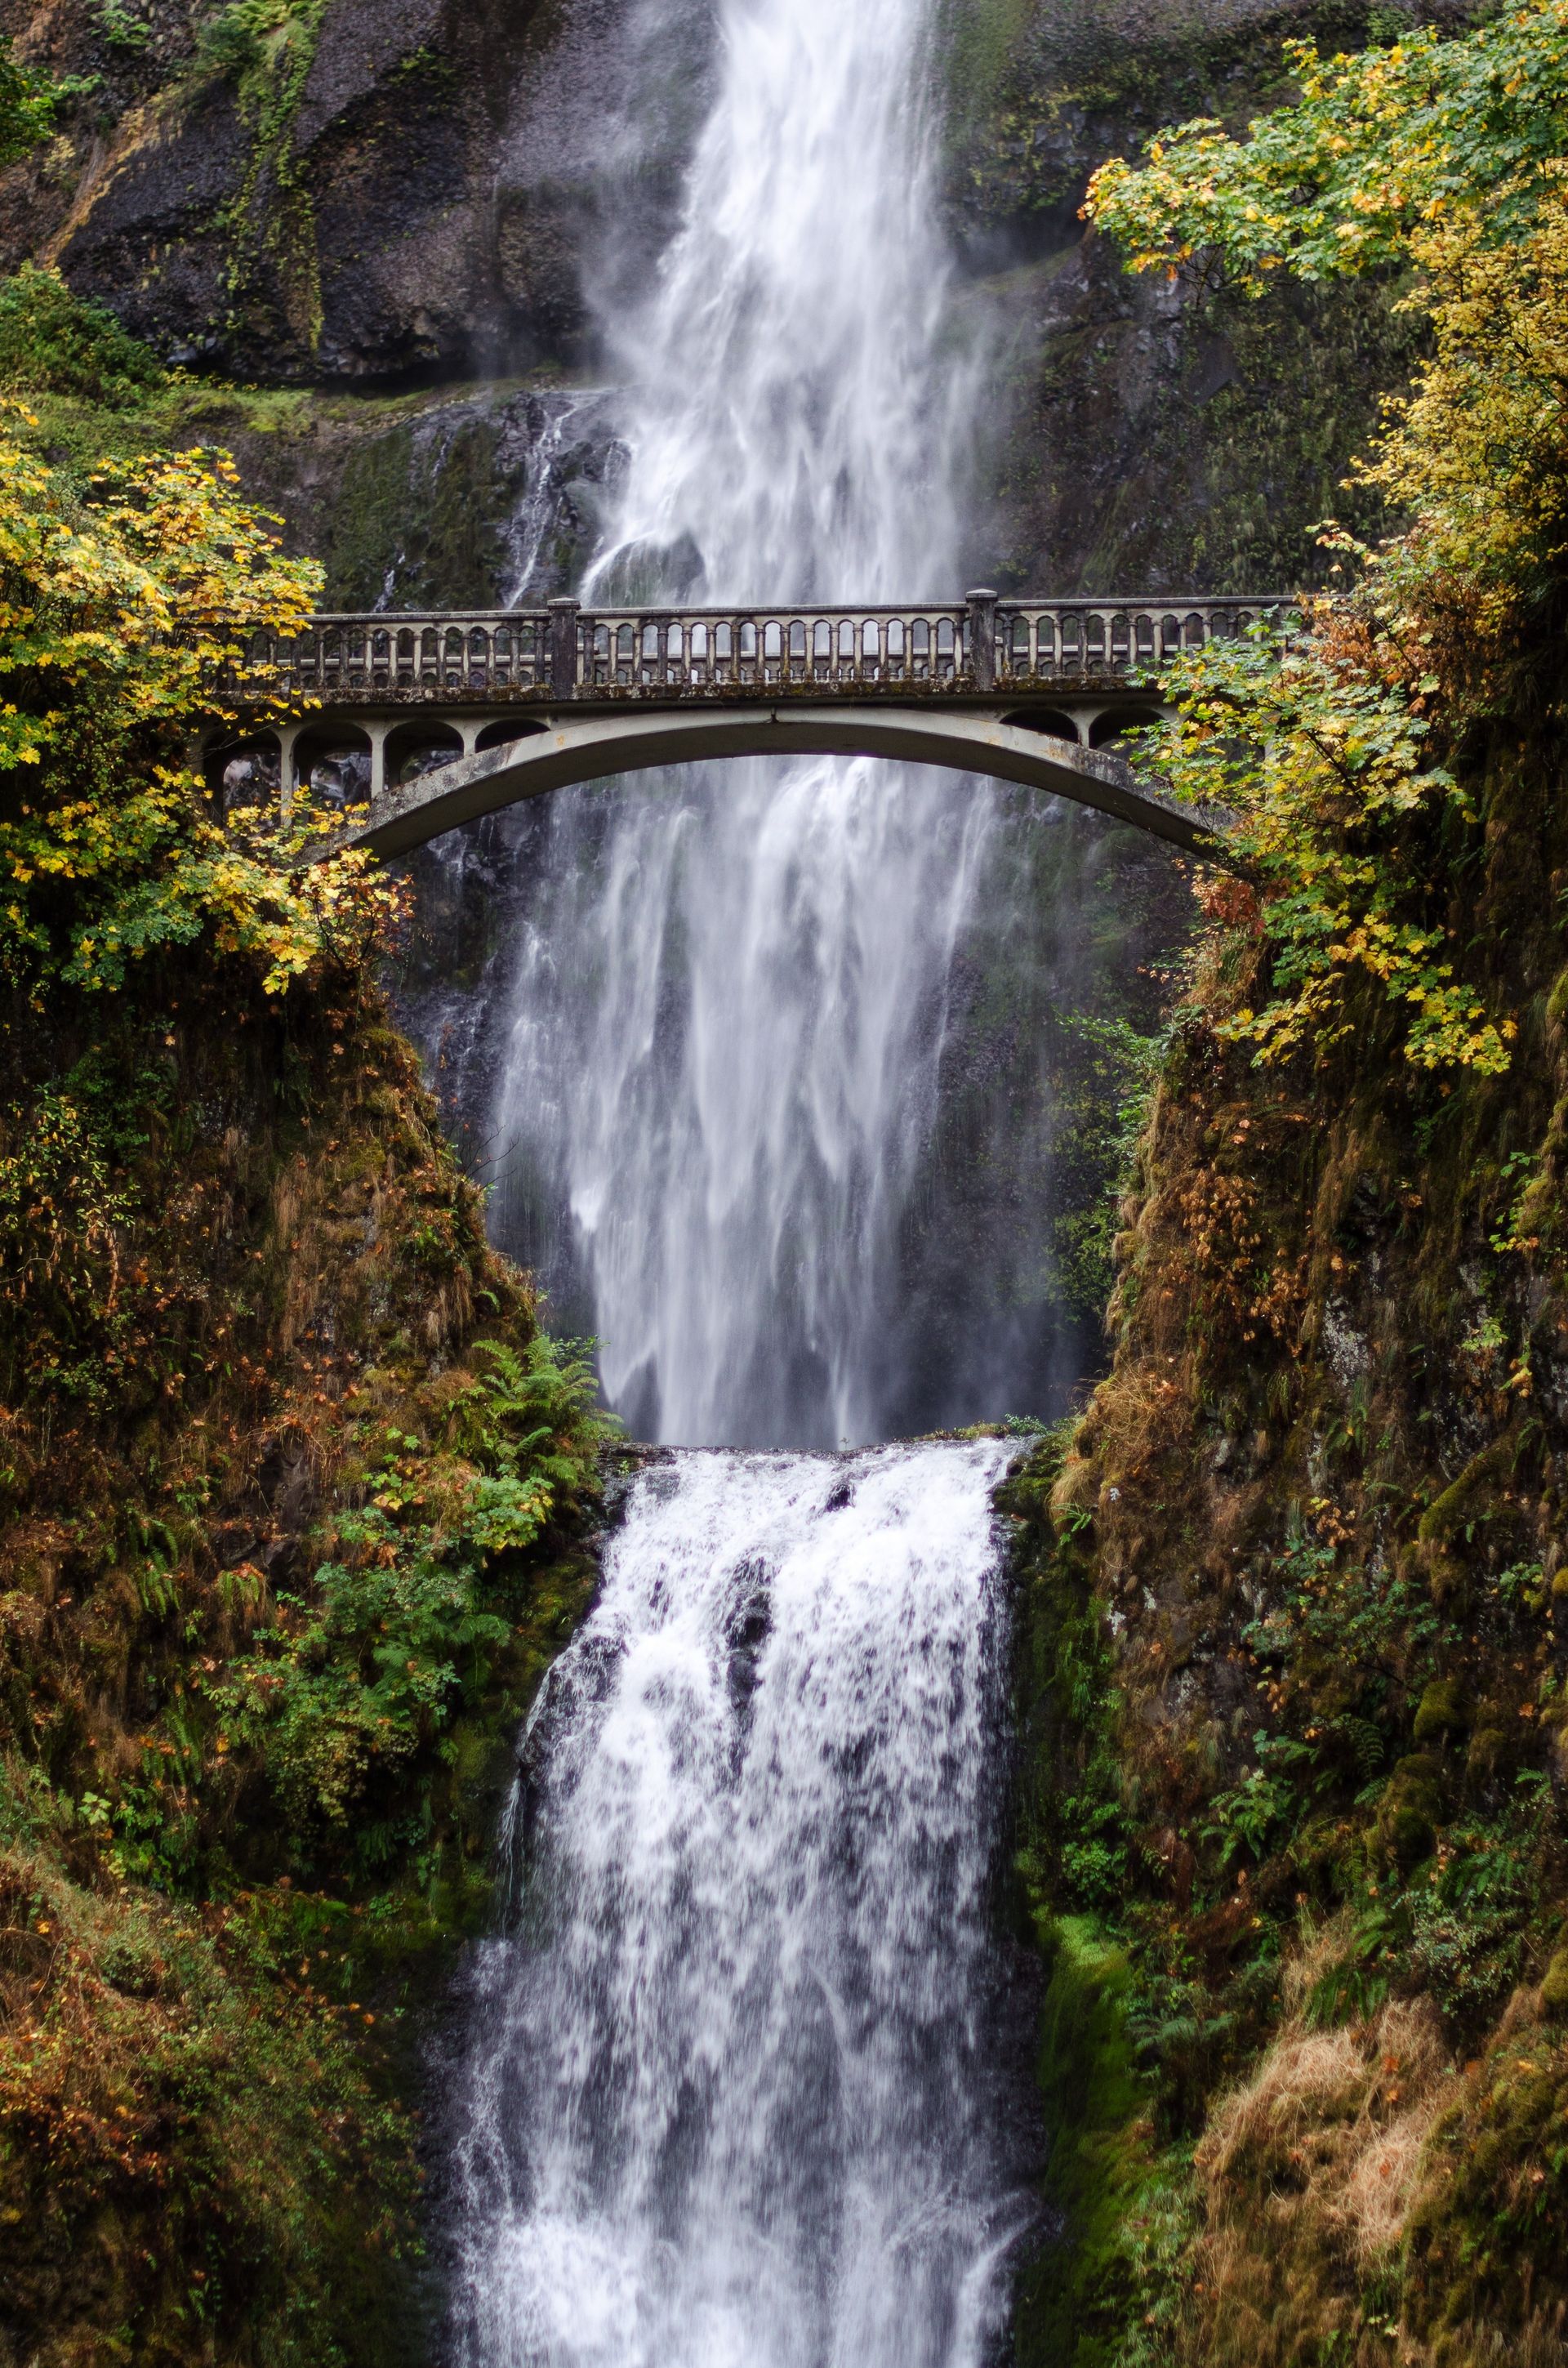 A bridge extends over Multnomah Falls in Oregon.